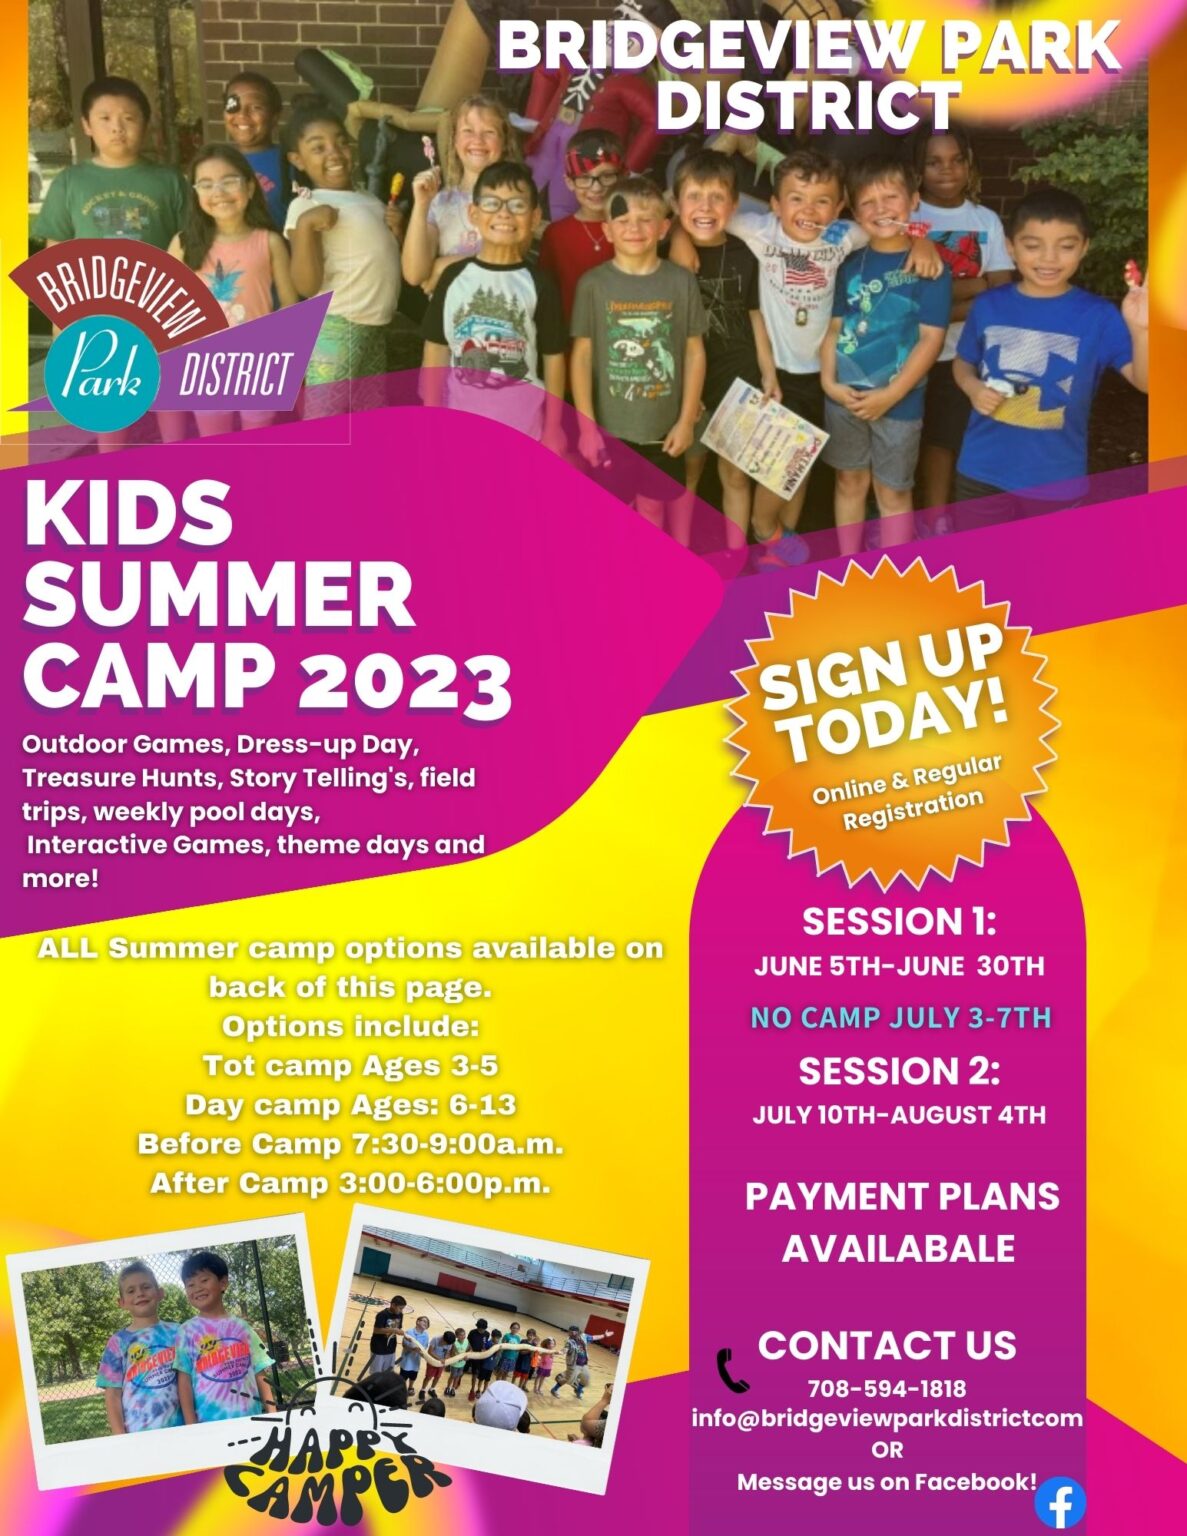 Summer Camp Bridgeview Park District